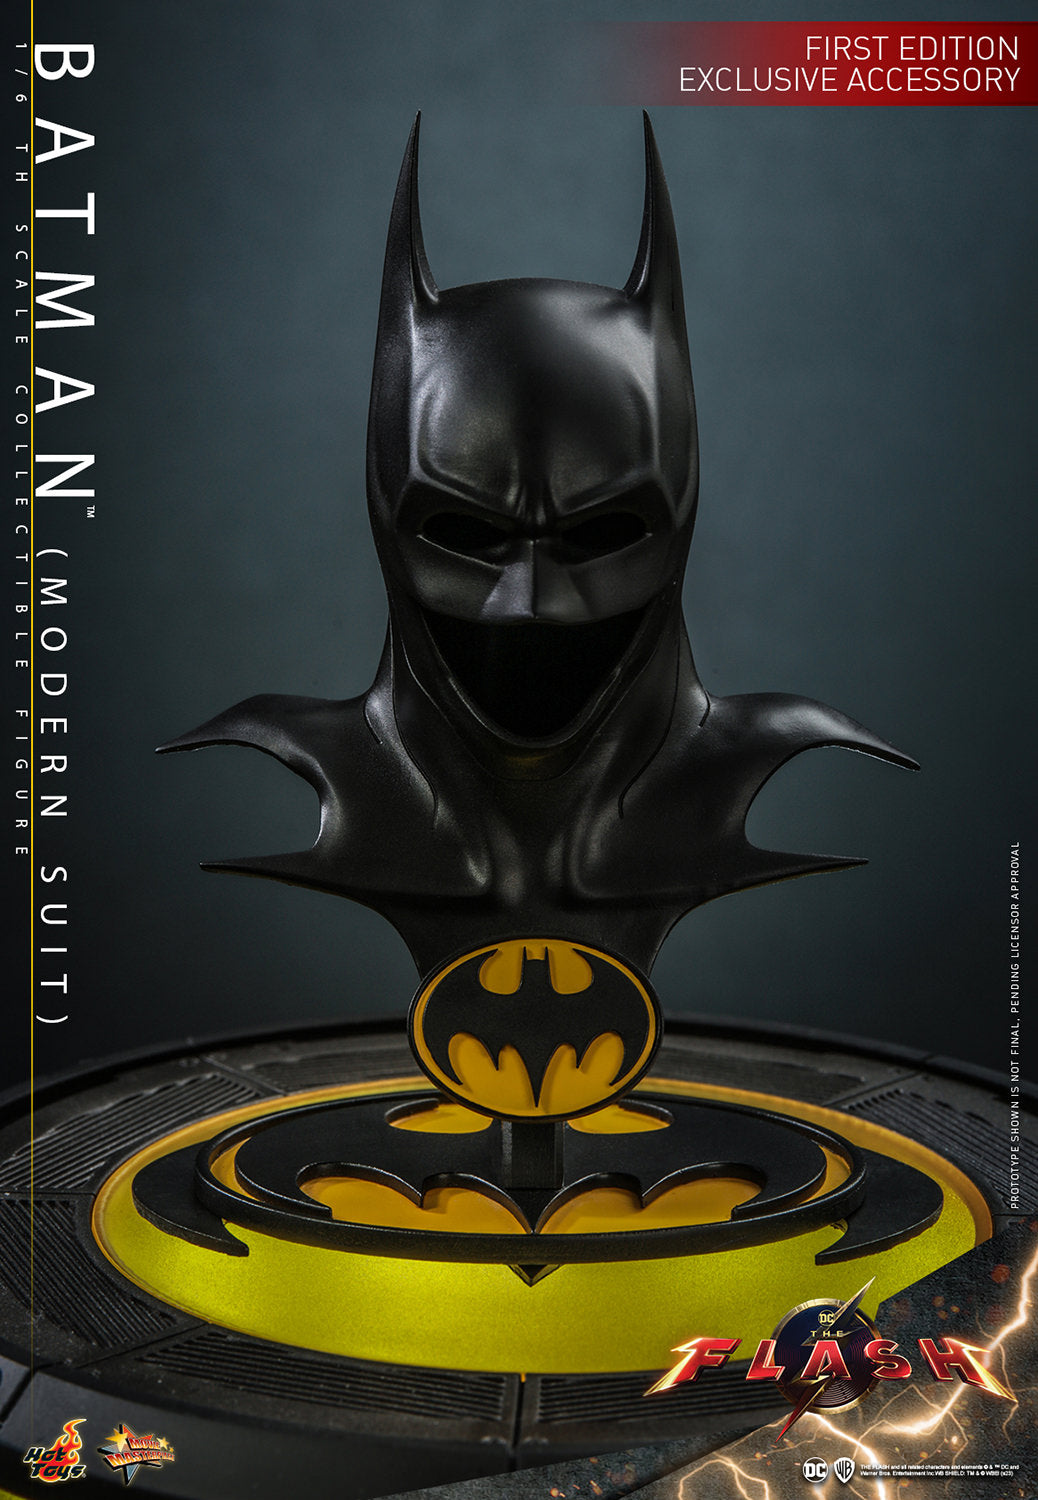 Batman (Modern Suit) 1/6 Scale Figure by Hot Toys